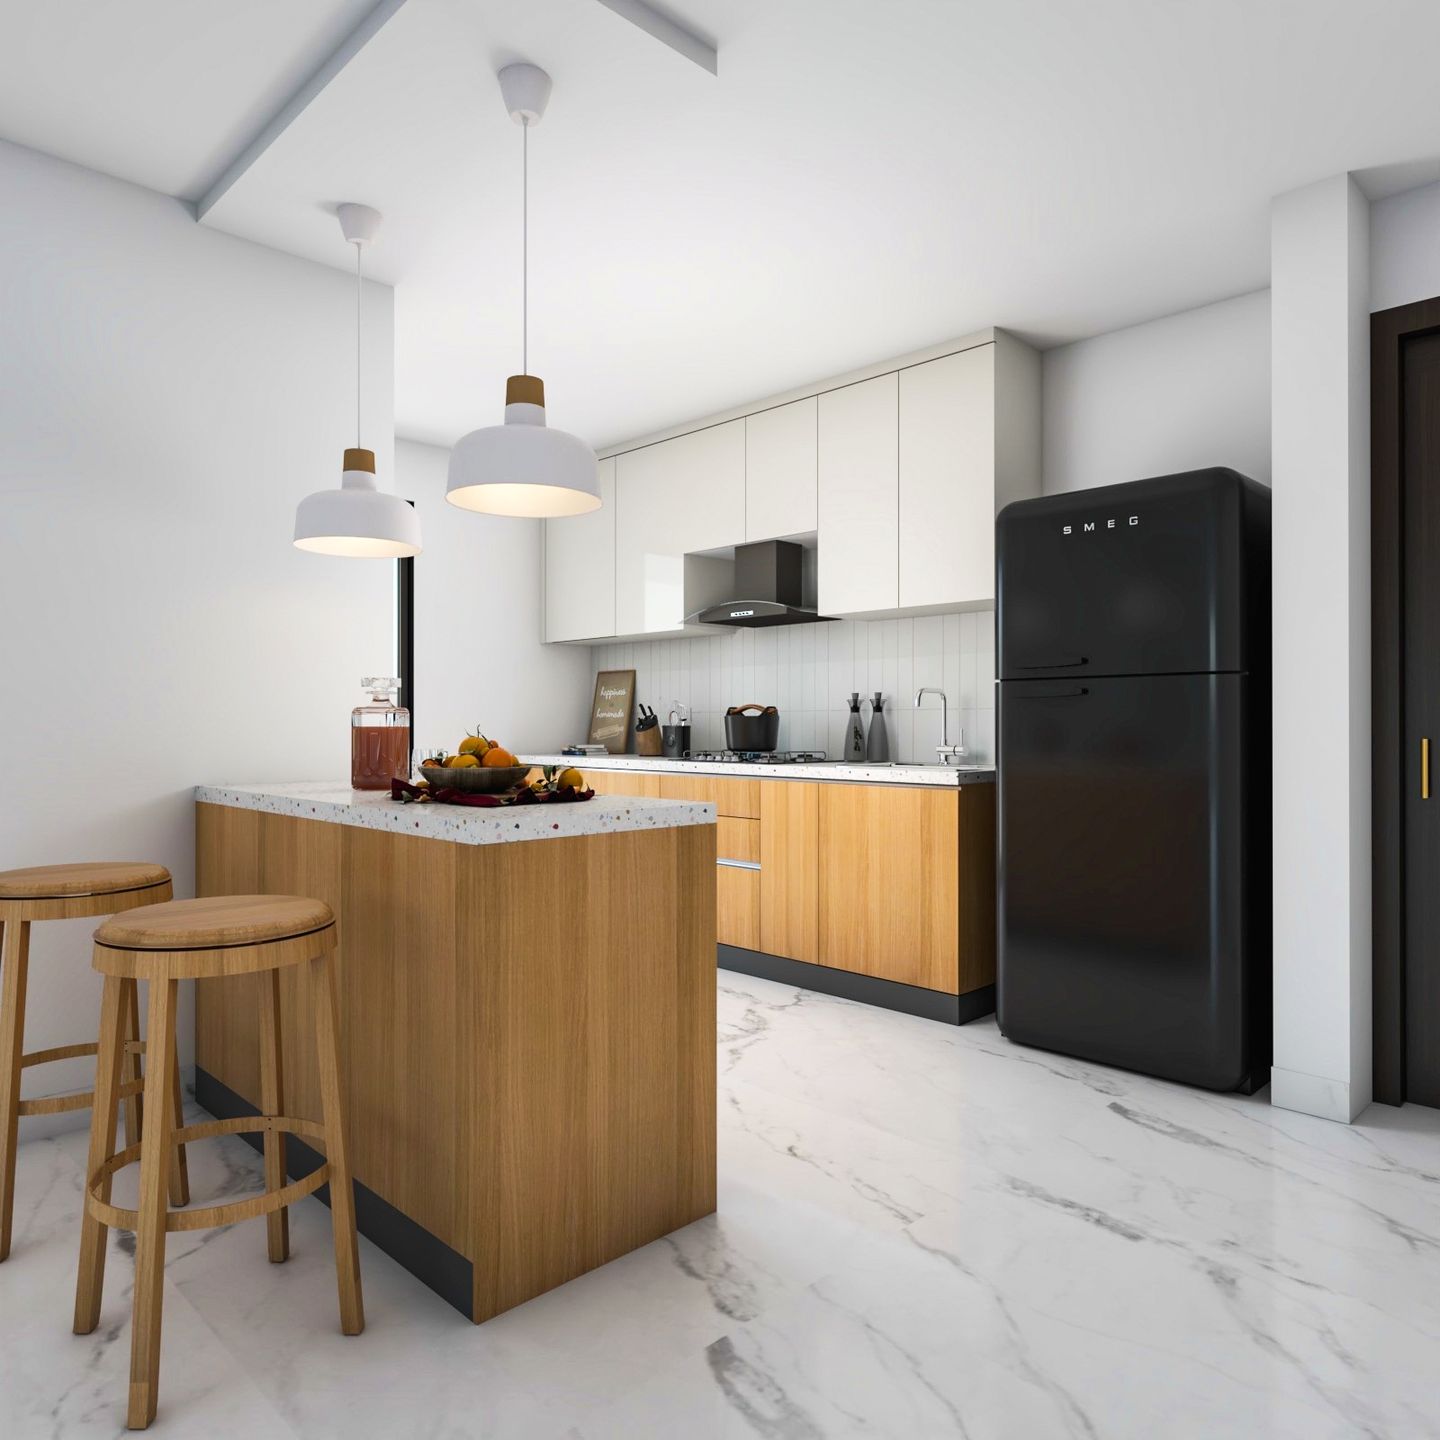 Parallel Kitchen Design With Brown Storage Cabinets - Livspace